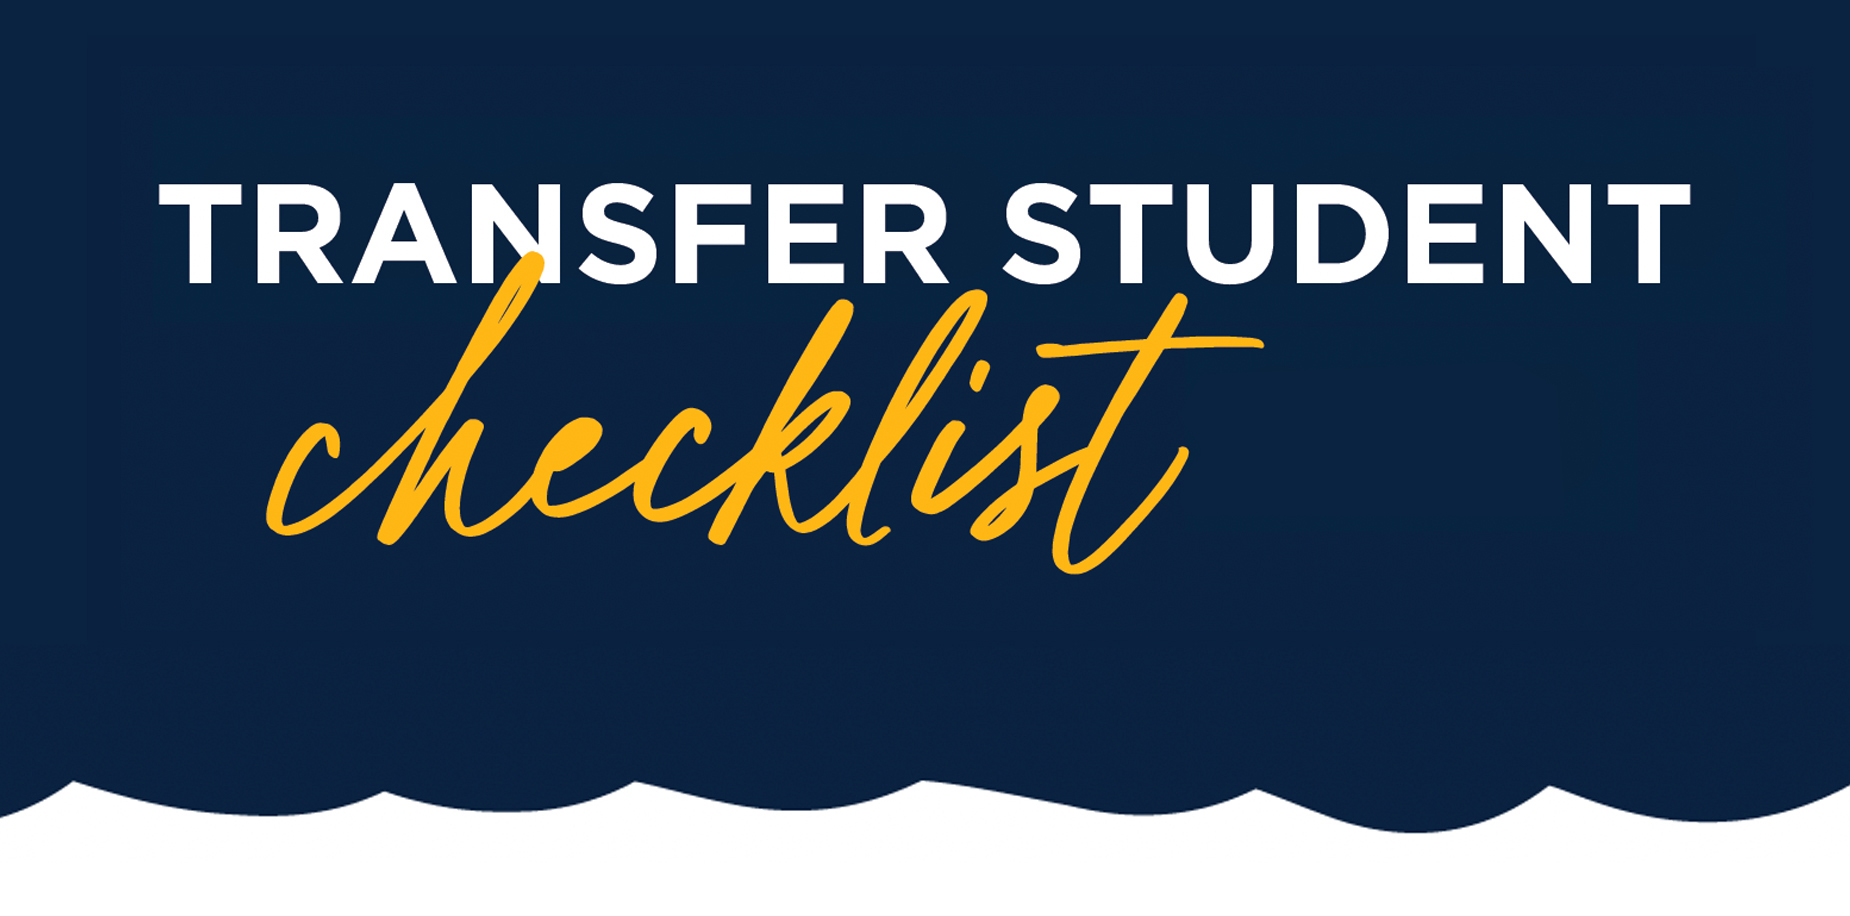 Transfer Student Checklist